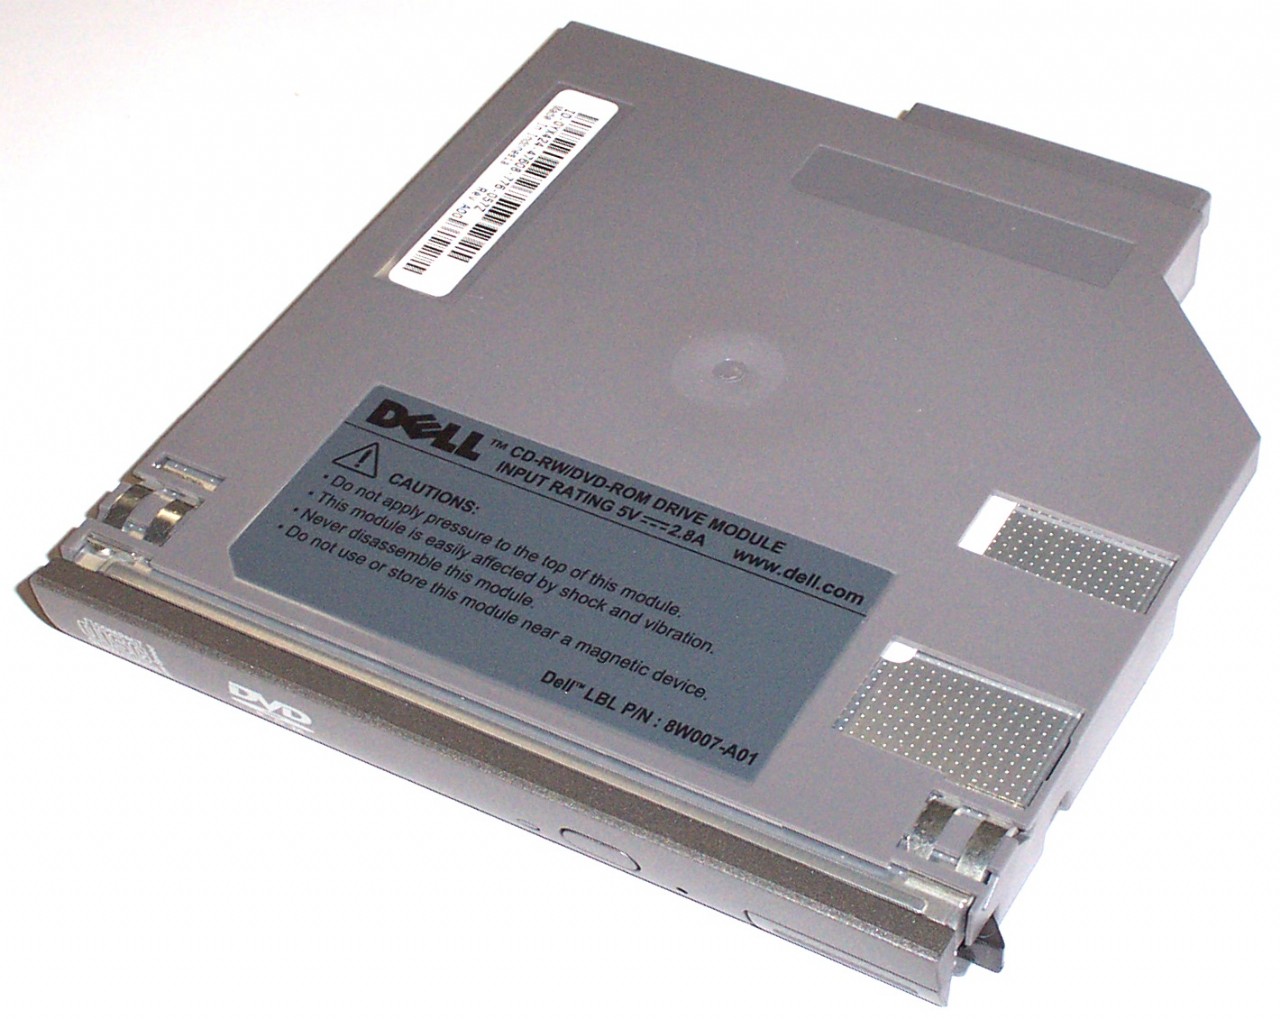 Dell YX424 OptiPlex SX280 Latitude D-Series CD-RW/DVD-ROM